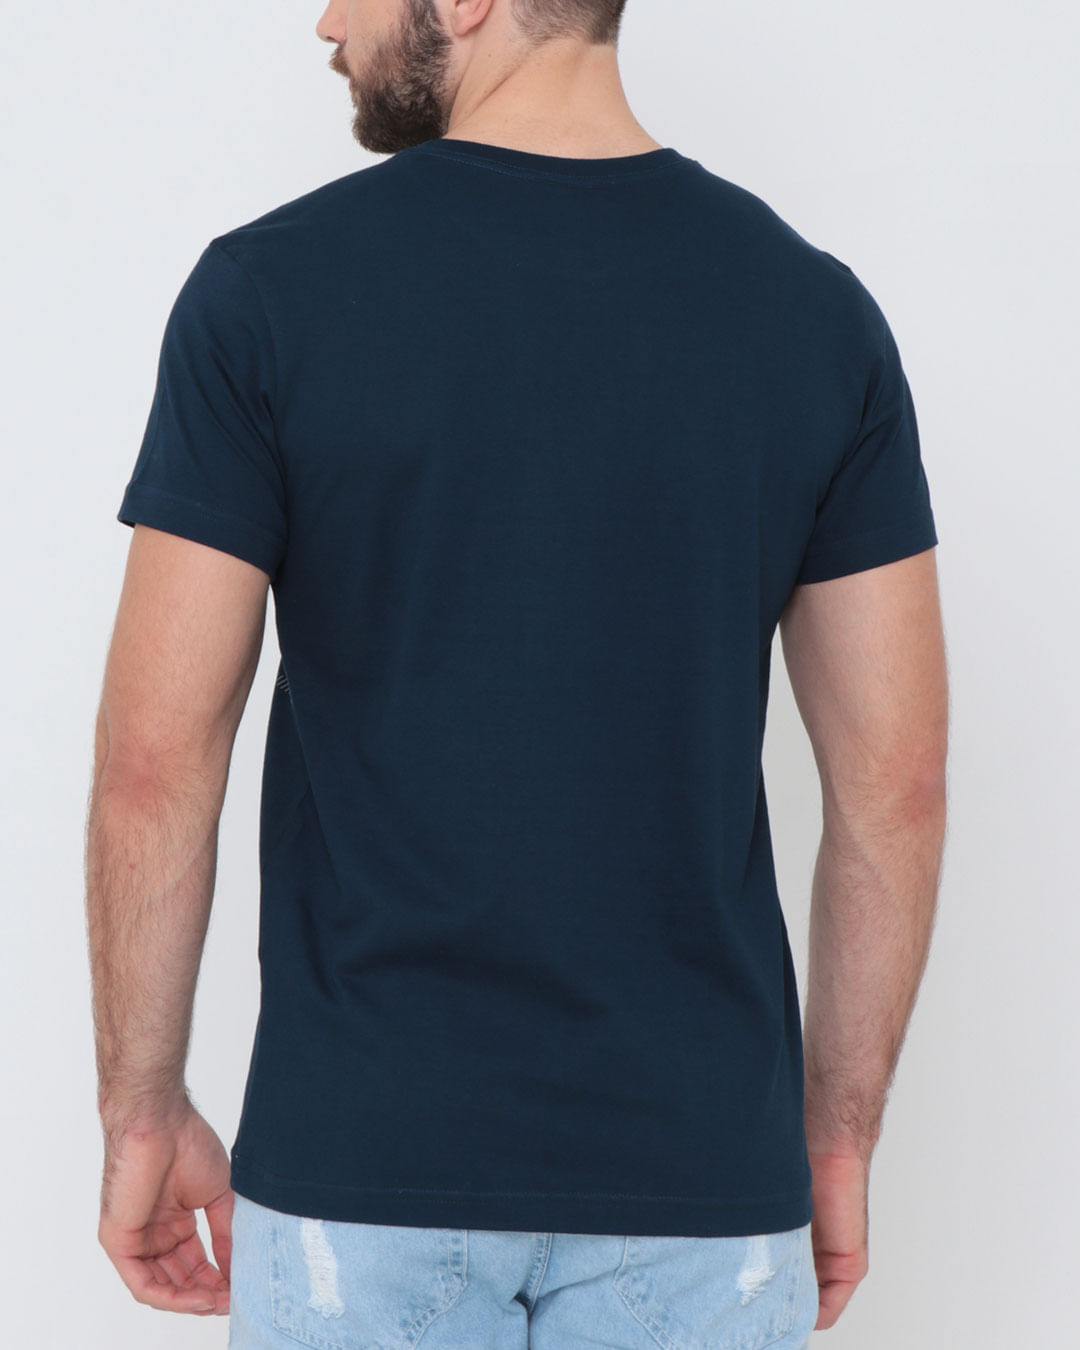 Camiseta-Manga-Curta-Estampada-Ecko-Azul-Marinho